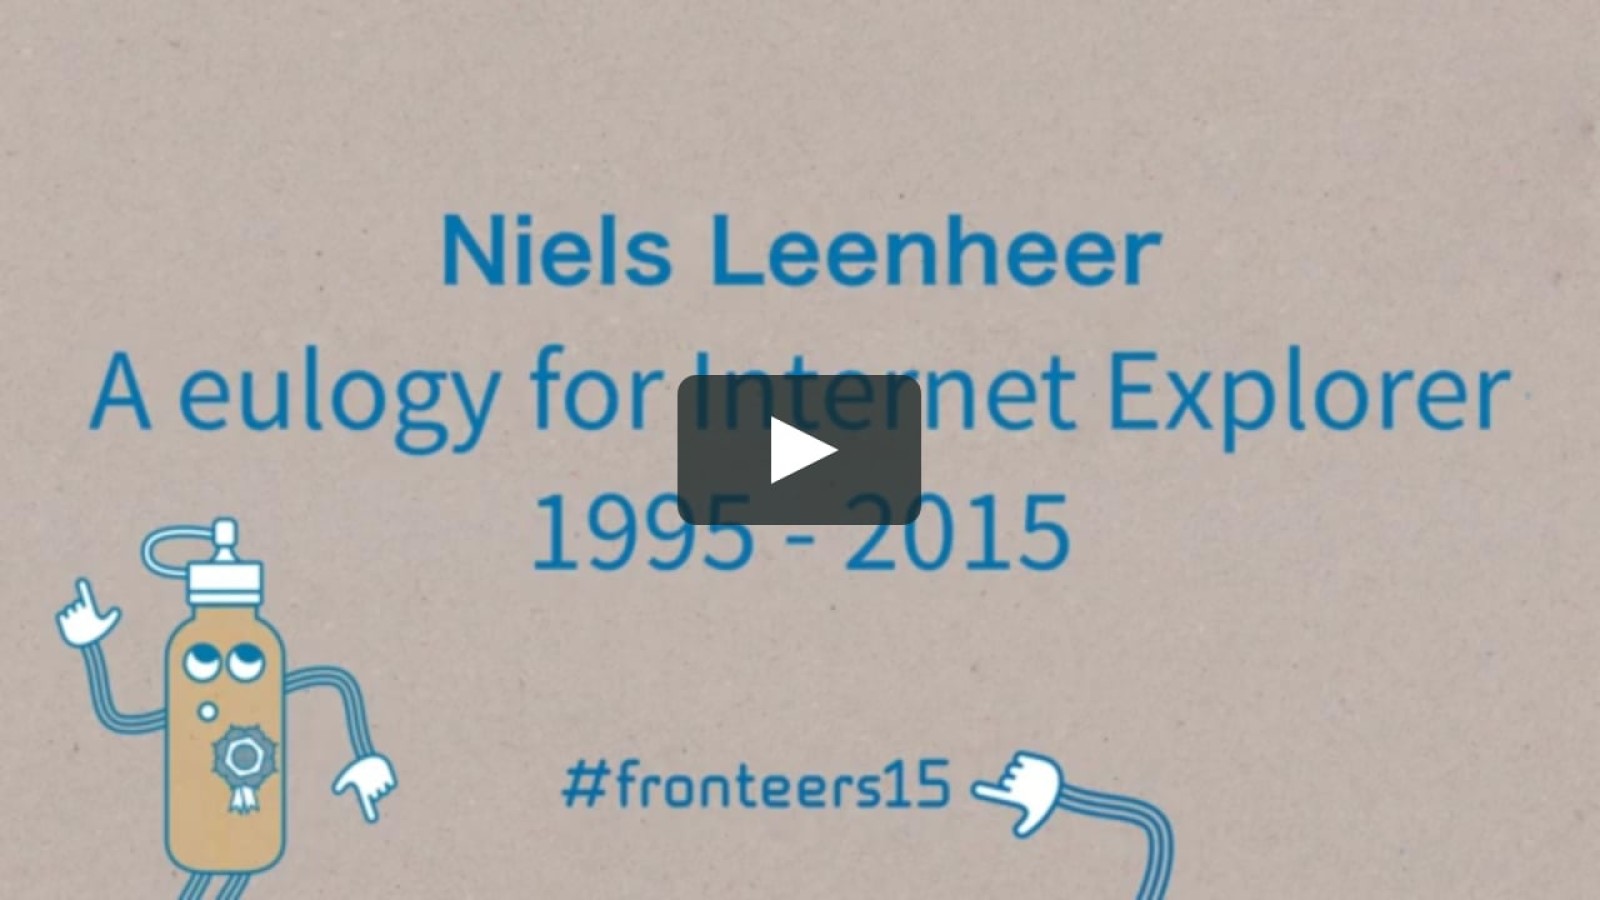 A eulogy for Internet Explorer